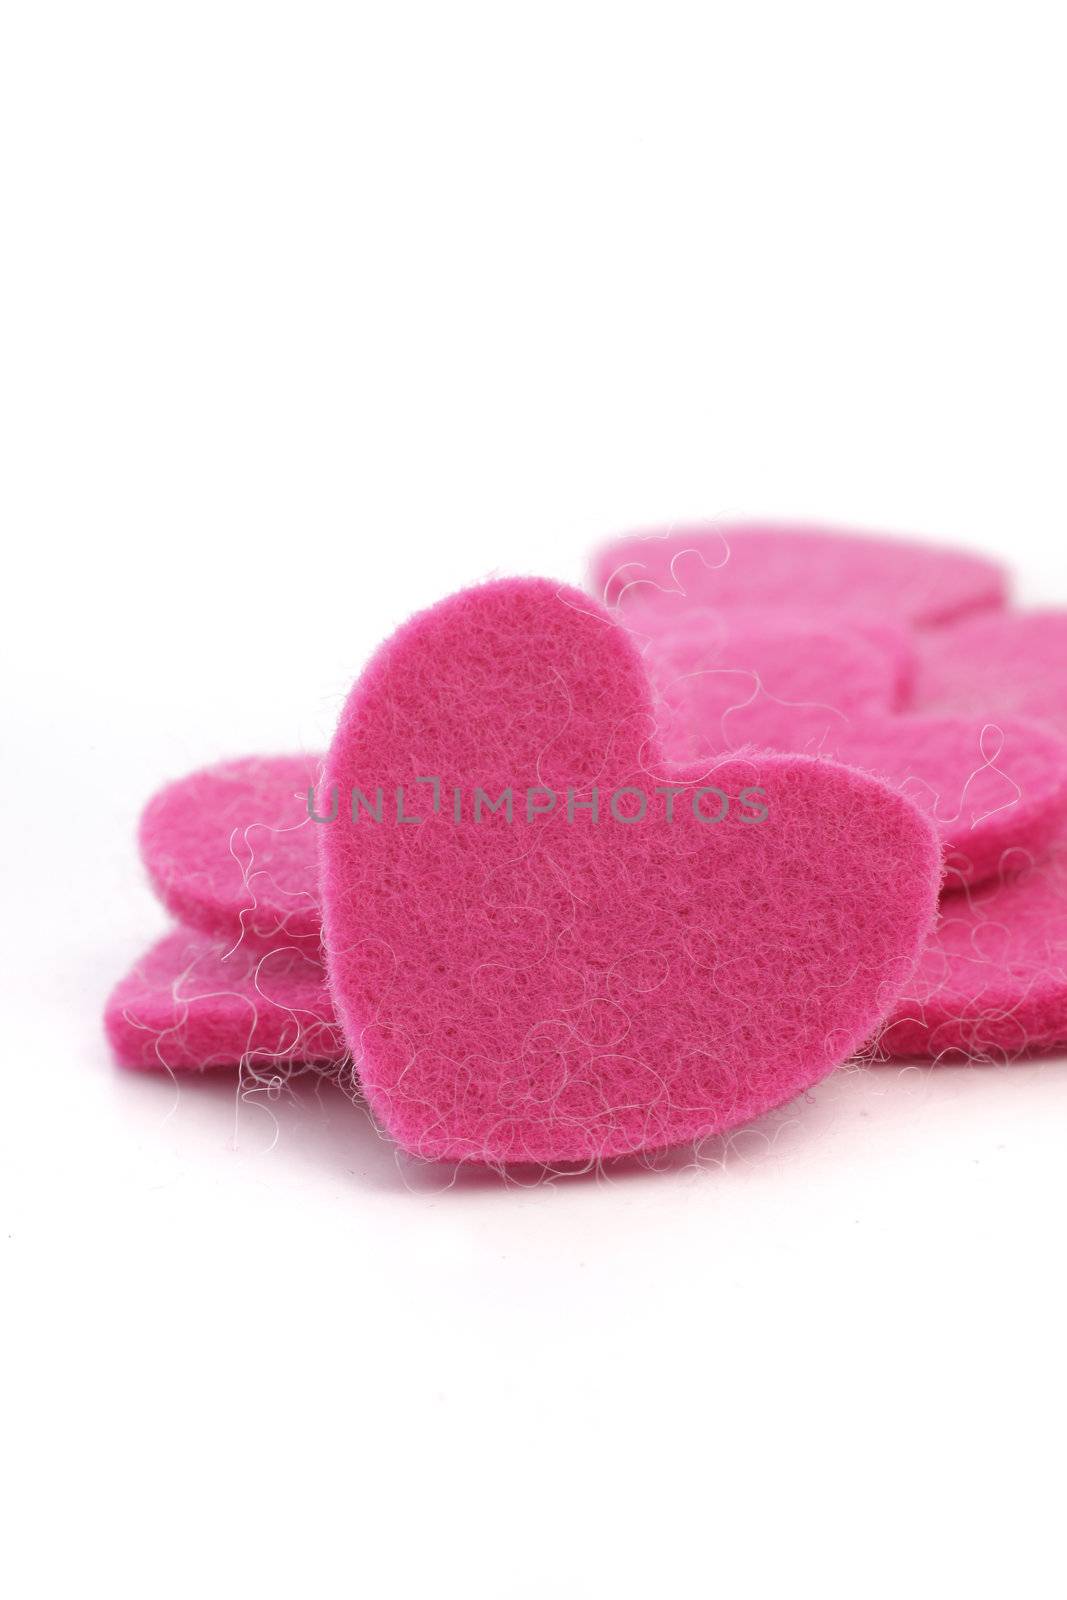 Romantic pink hearts by Farina6000